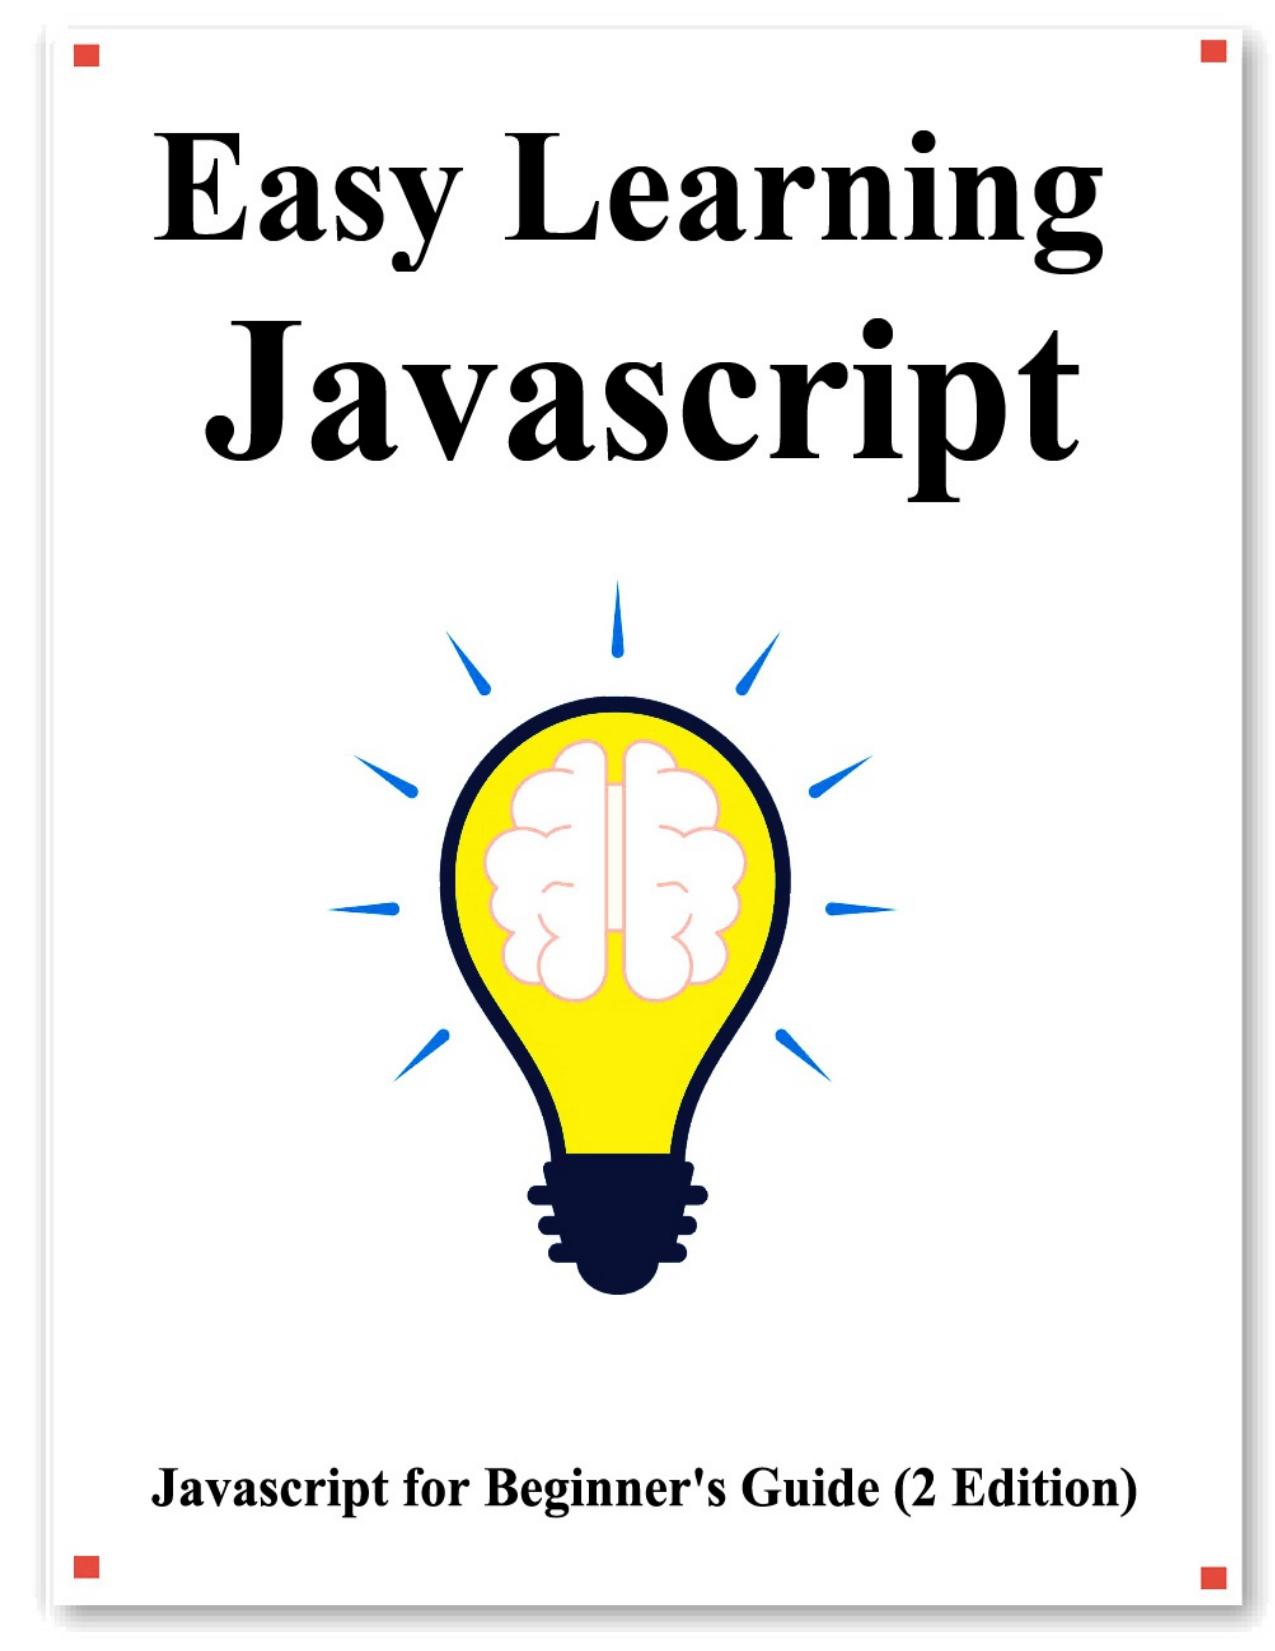 JavaScript-Developer-I Testking